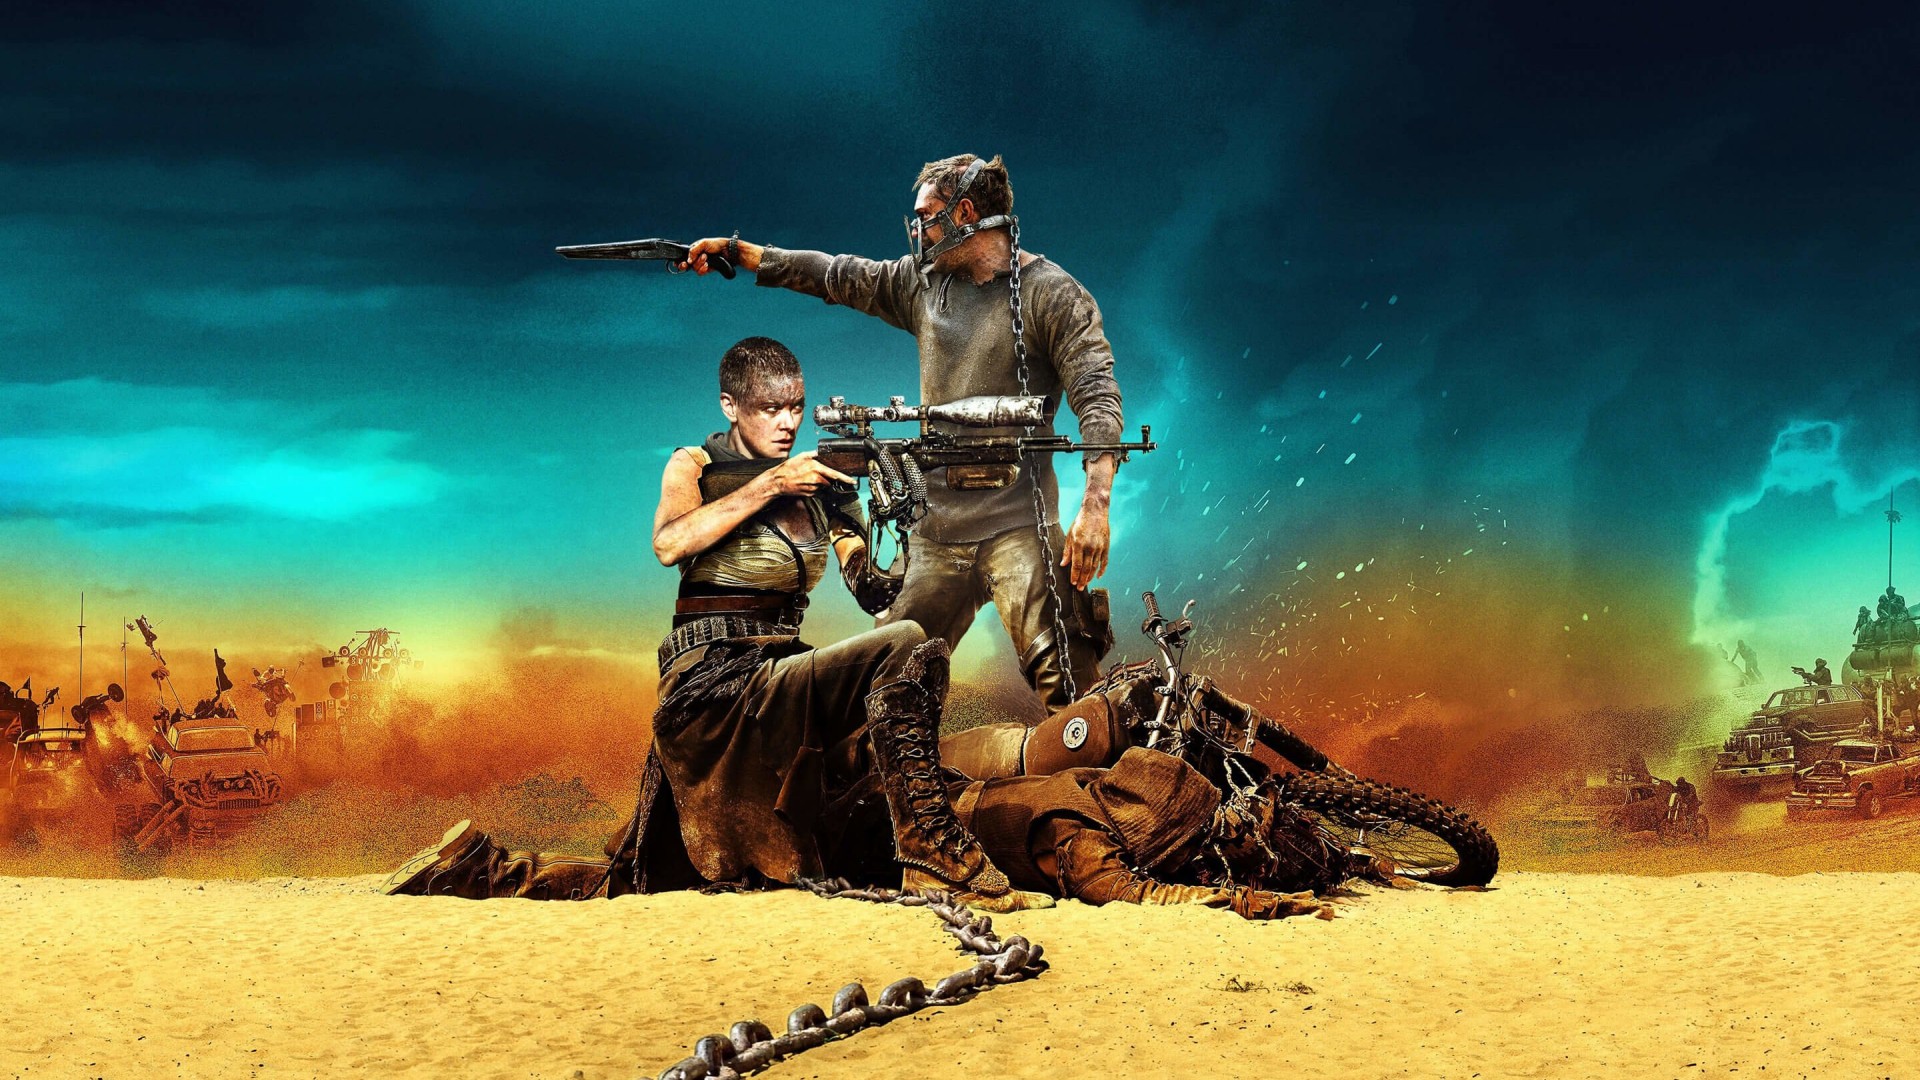 Mad Max: Fury Road Movie (2015) Wallpaper for Desktop 1920x1080